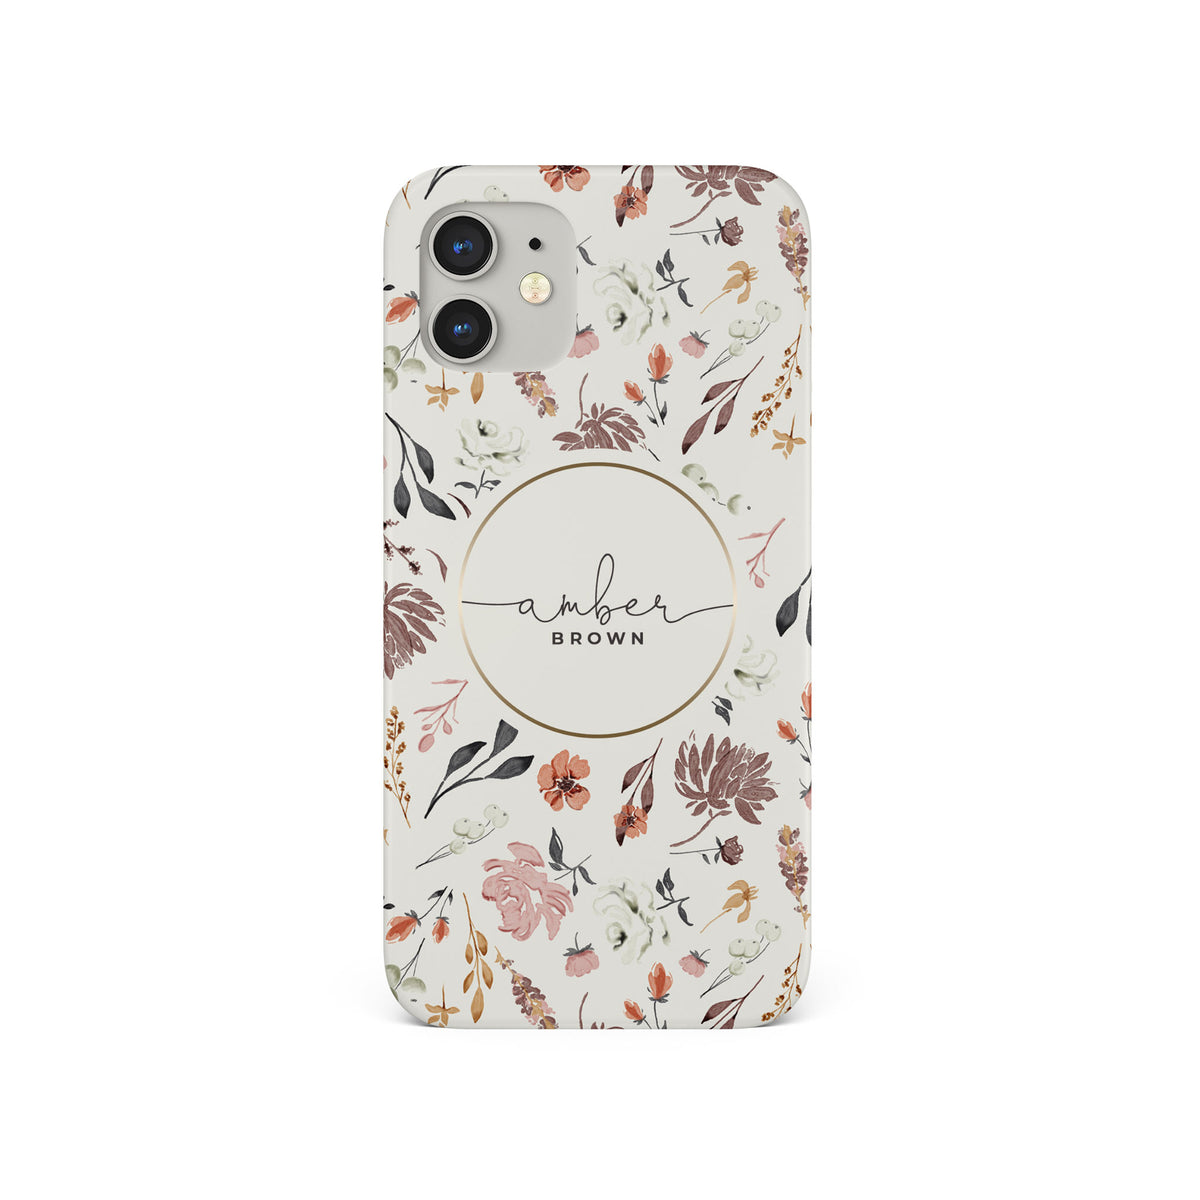 Personalised Hard Phone Case Autumn Flowers on White